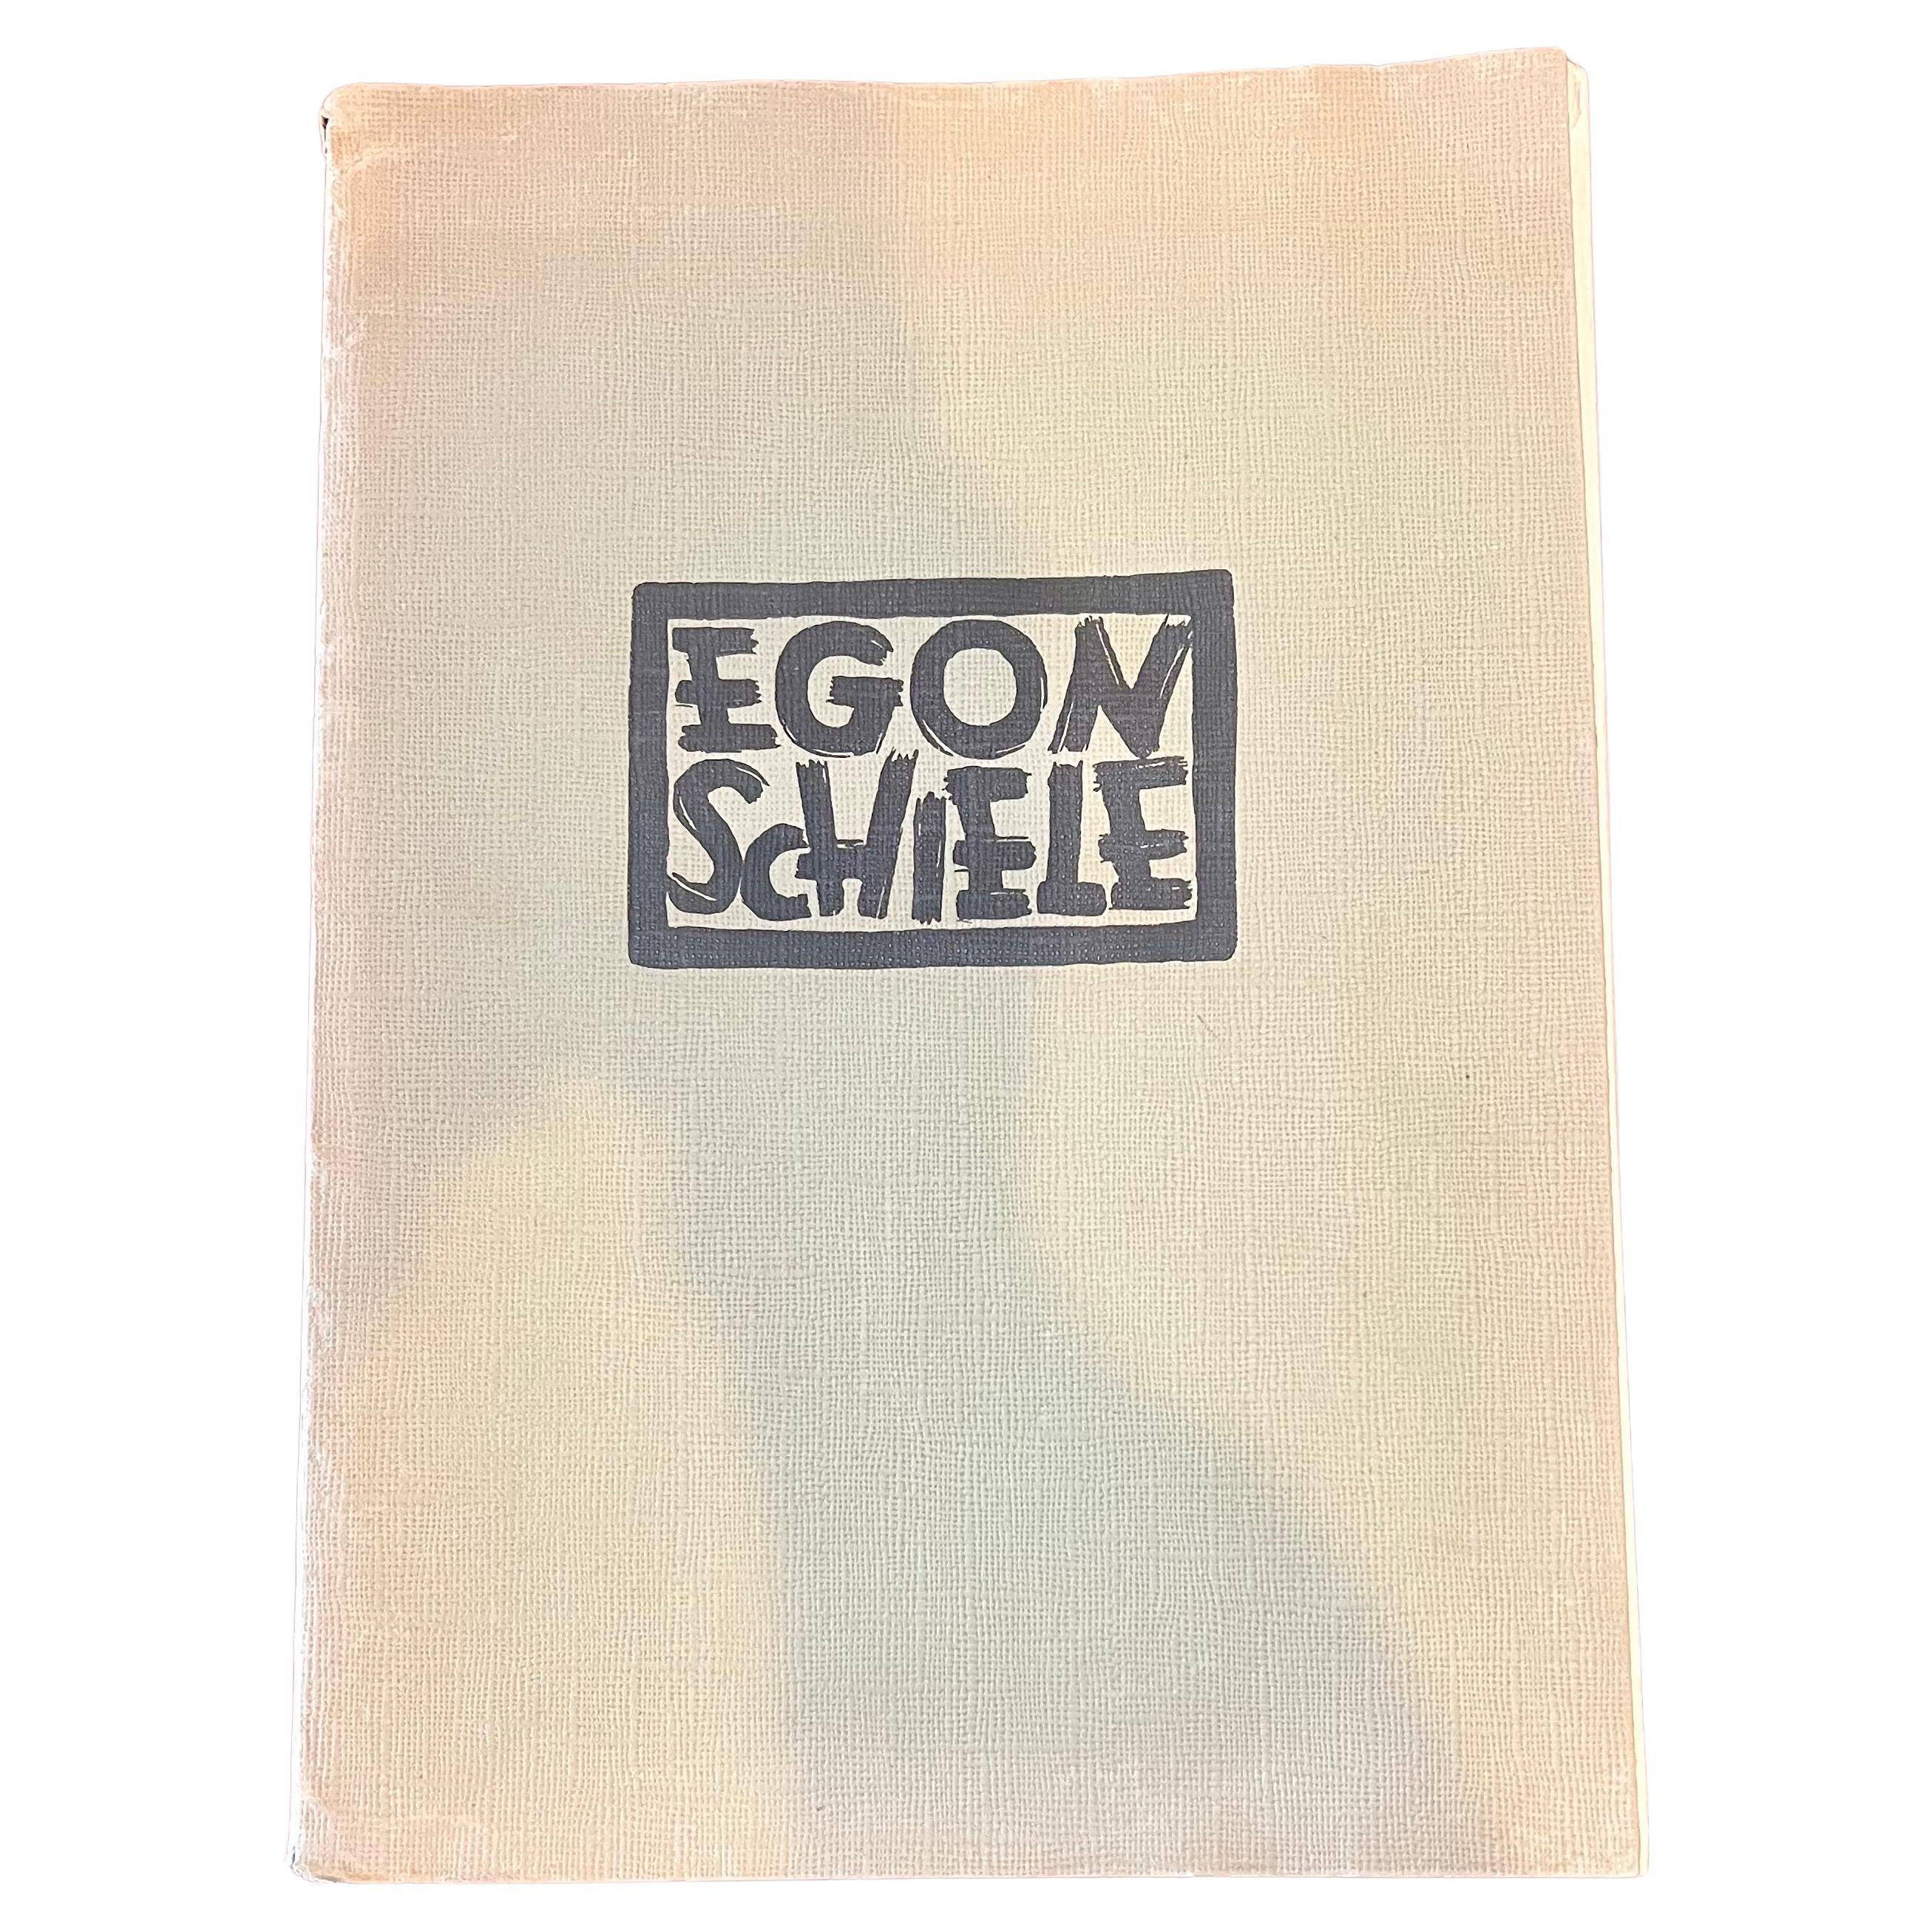 First Edition Rare Portofolio Booklet by Egon Schiele 24 Unframed Prints